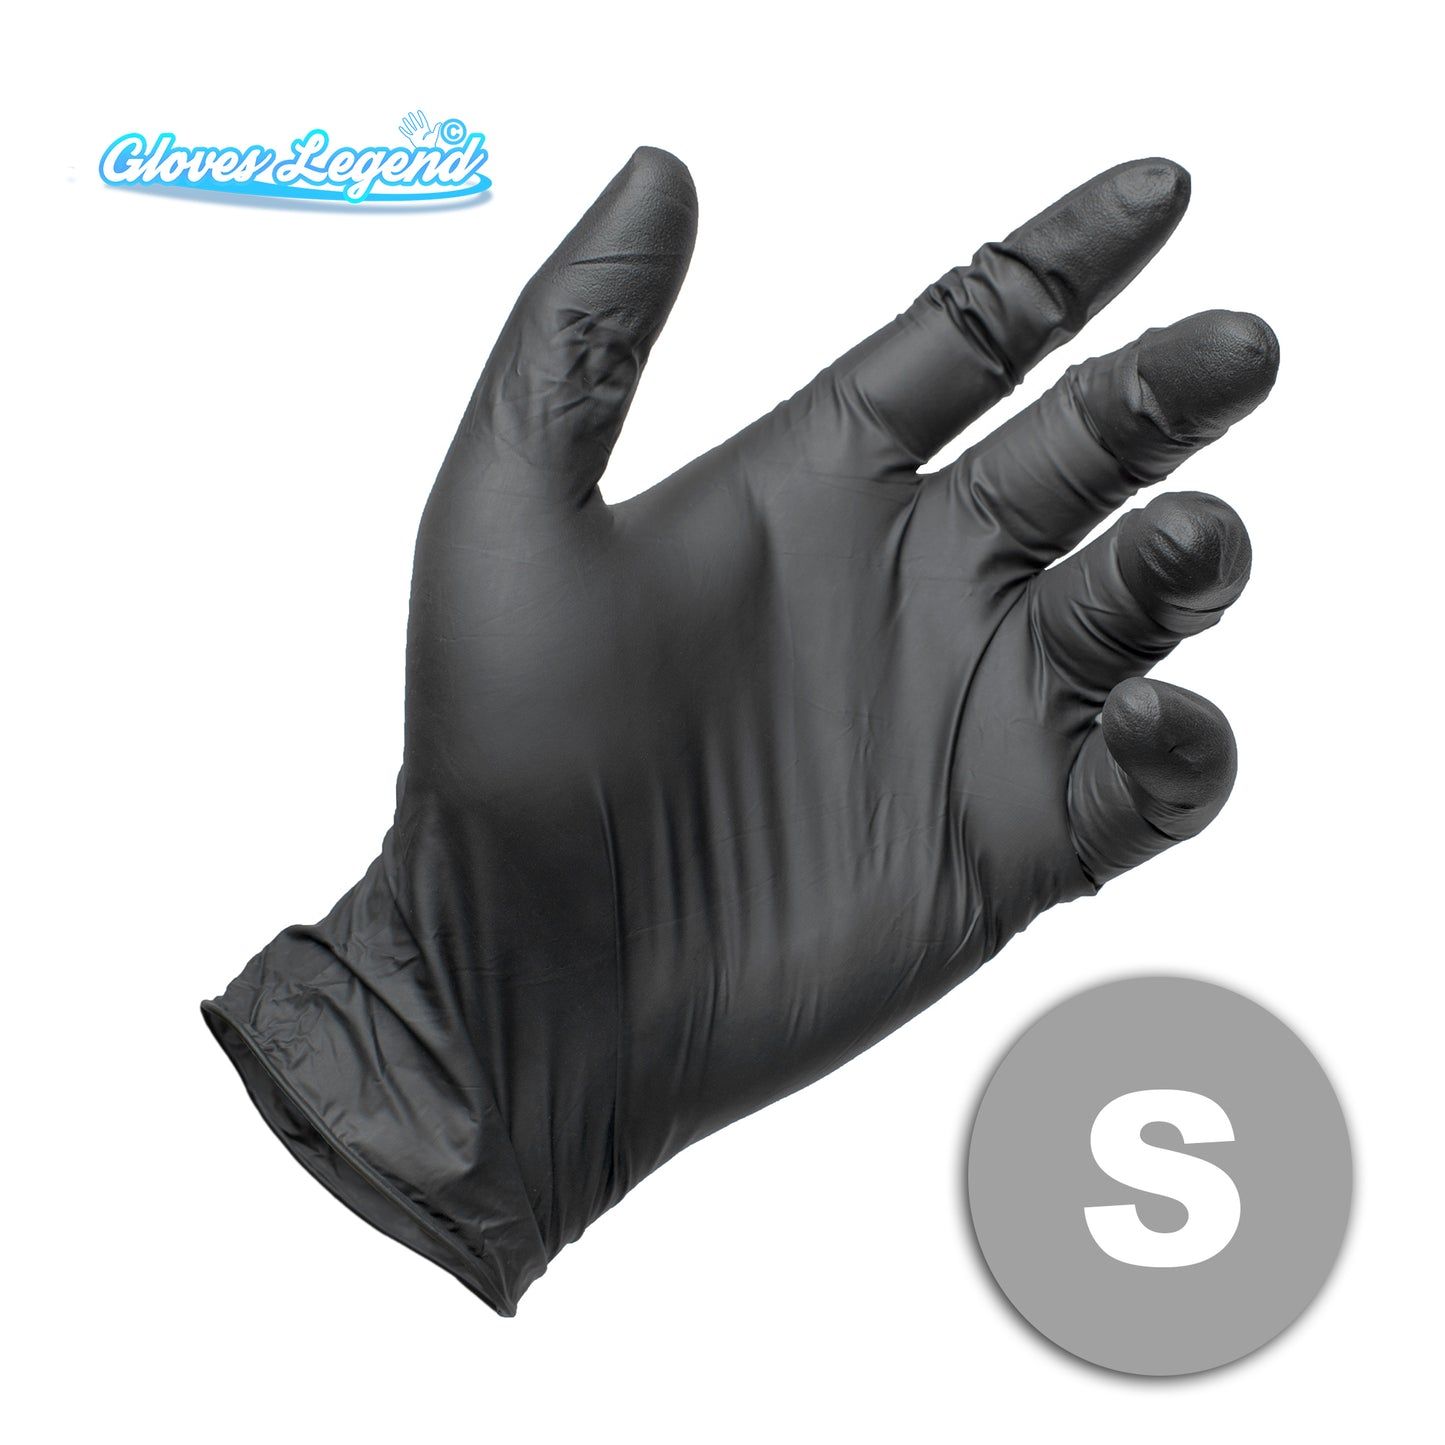 One Box (100 Gloves) - Size Small - Black Nitrile Powder Free Medical Exam Tattoos Piercing Gloves